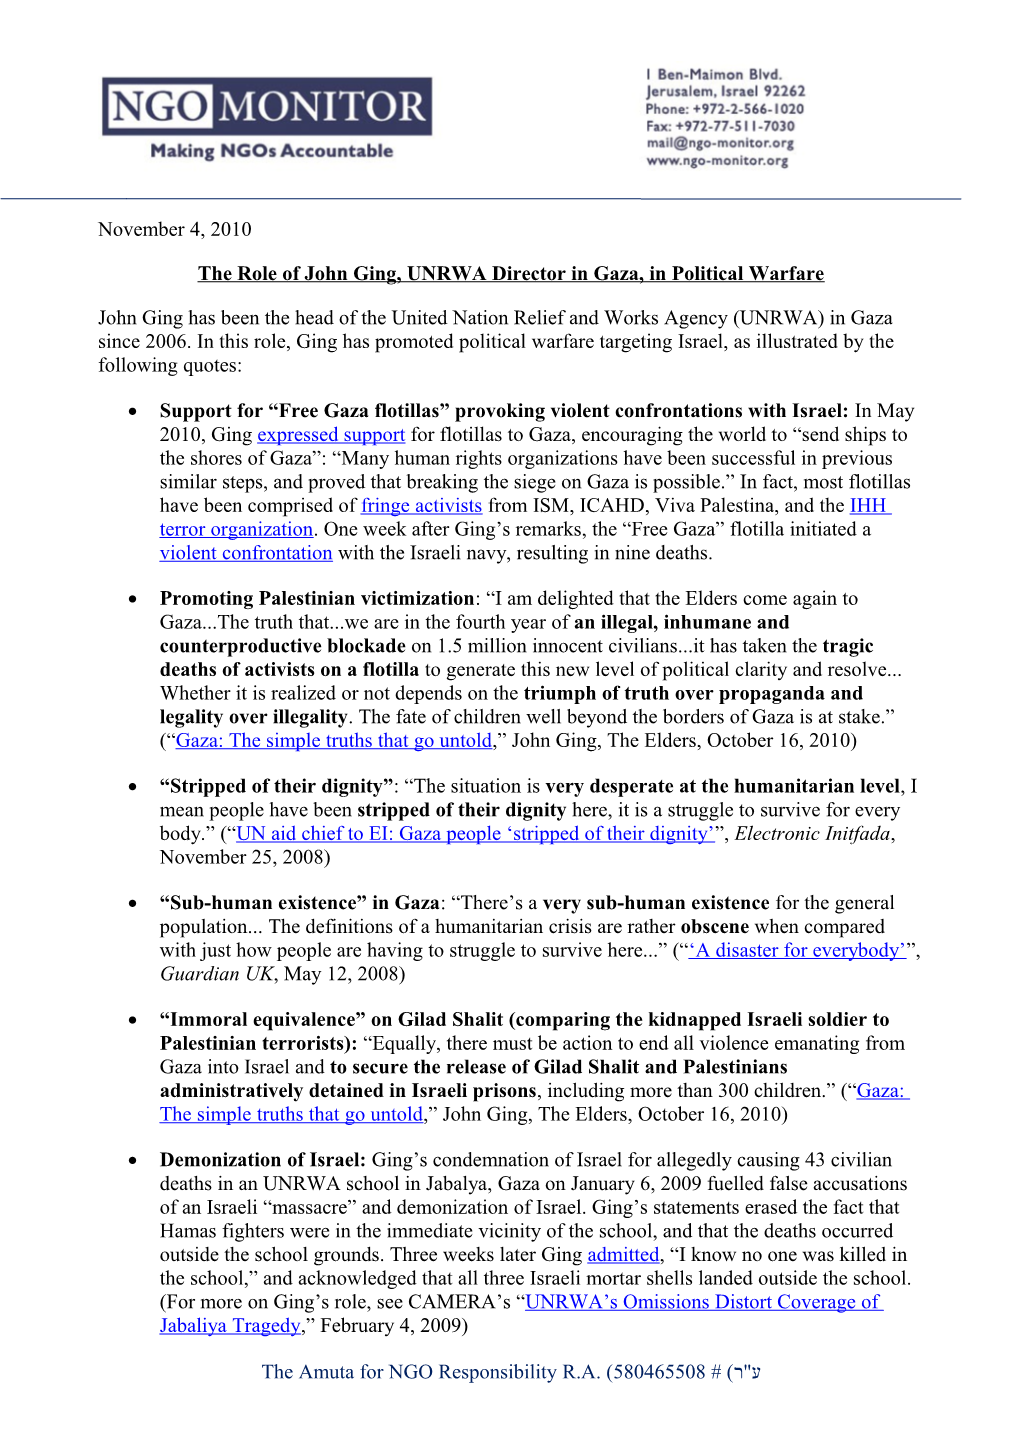 The Role of John Ging, UNRWA Director in Gaza, in Political Warfare